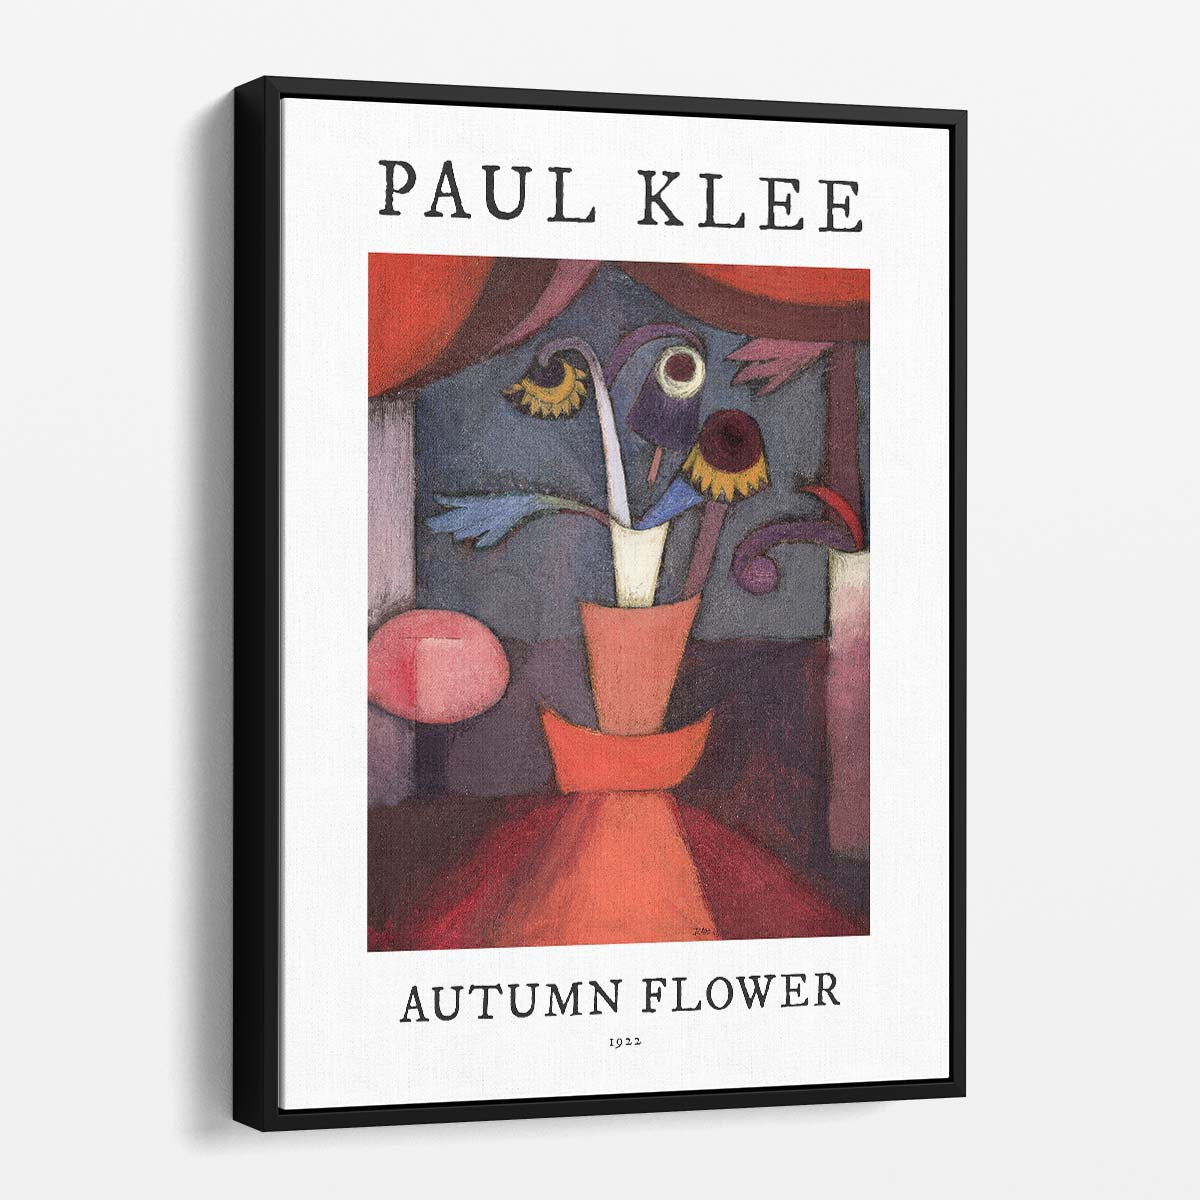 Paul Klee's 1922 Autumn Flower Modern Art Illustration by Luxuriance Designs, made in USA